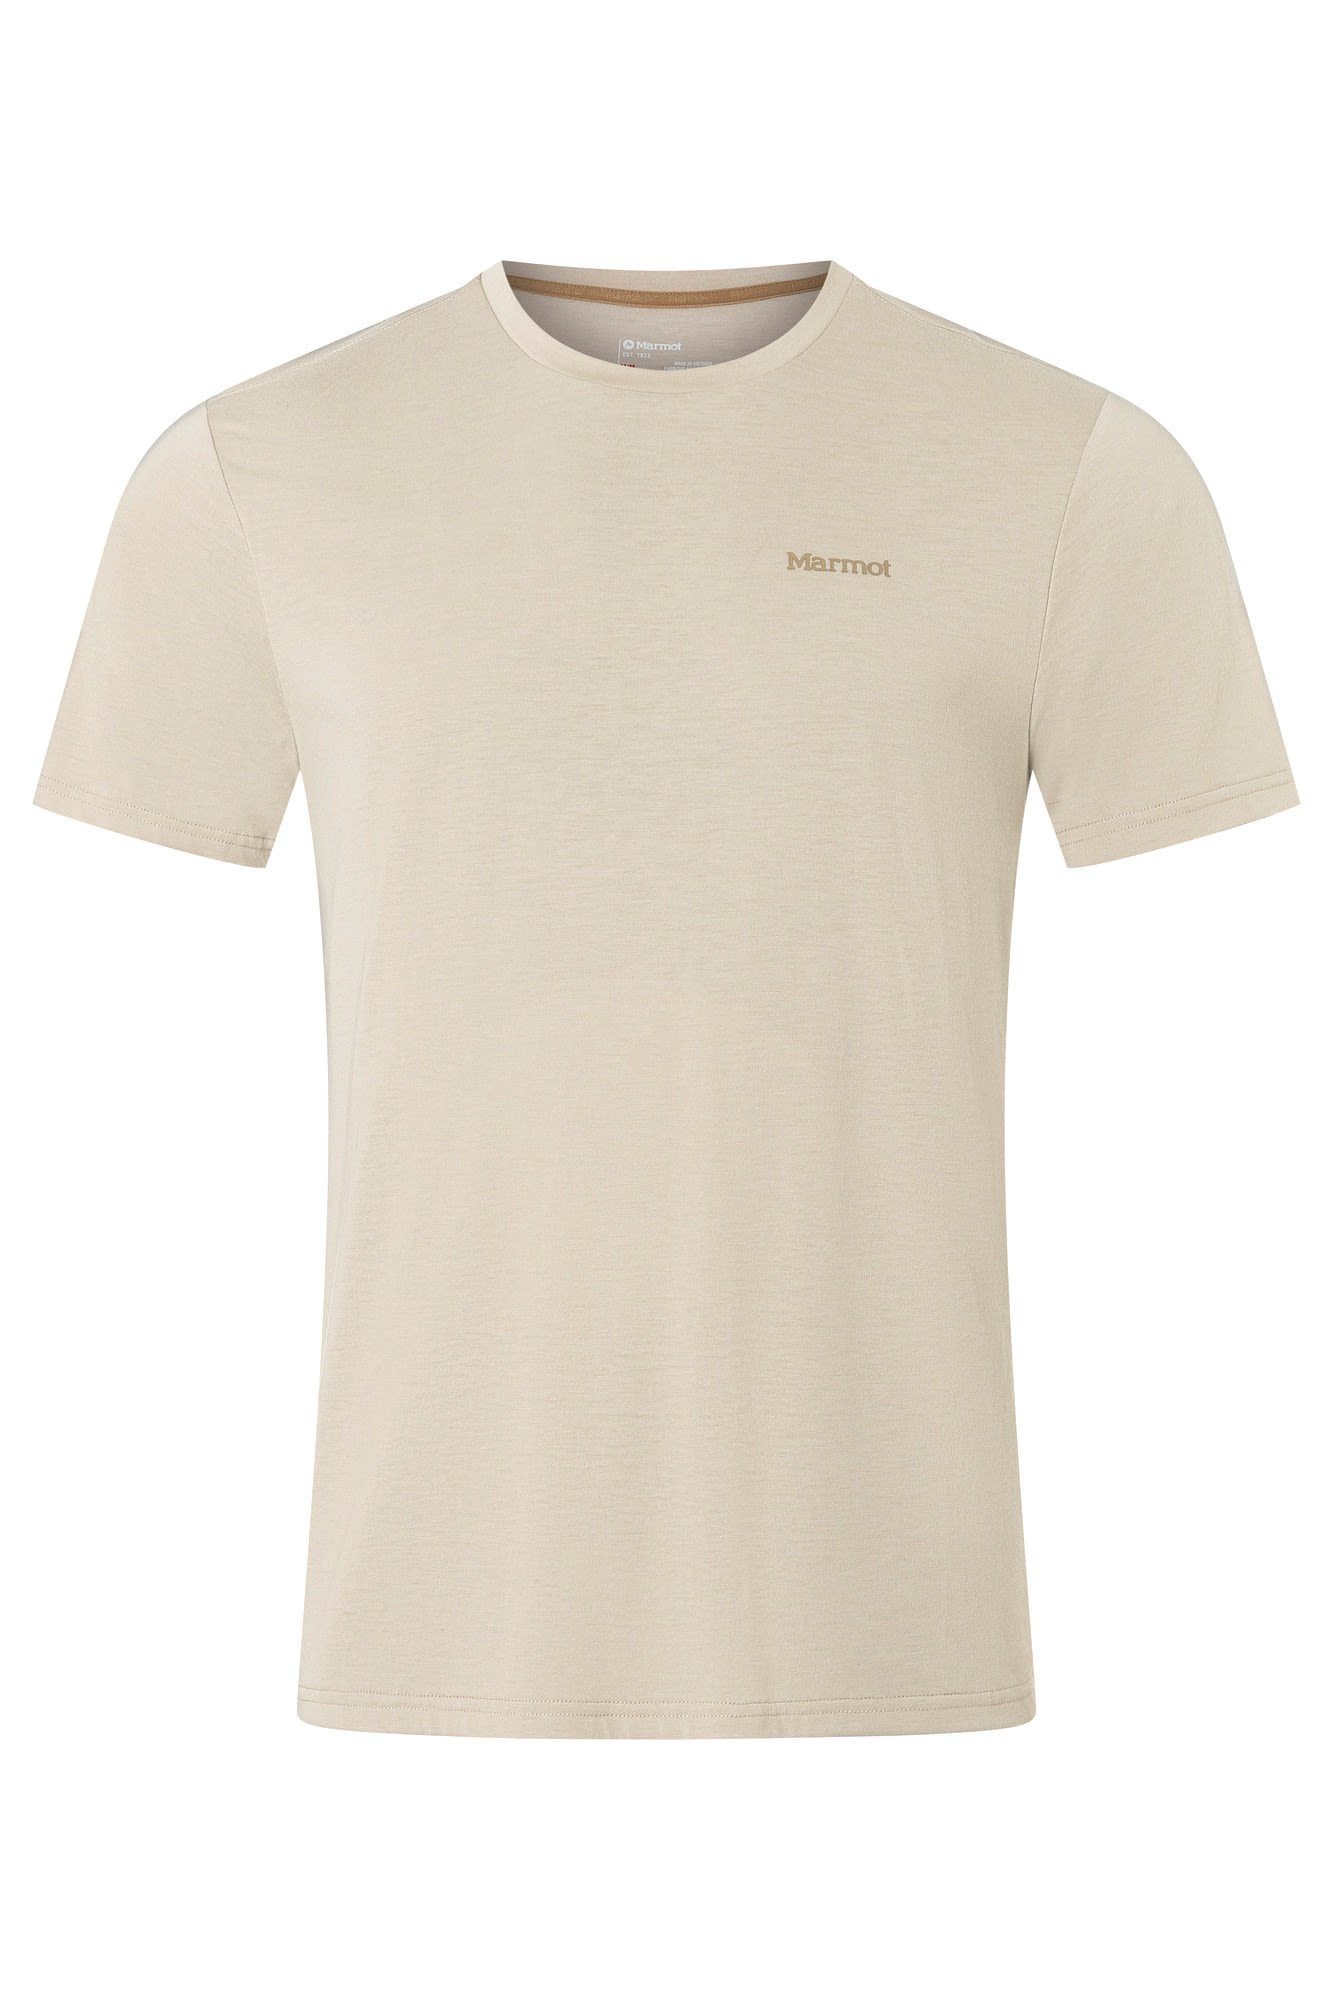 Marmot T-Shirt Herren M Crossover Marmot Short-sleeve Sandbar